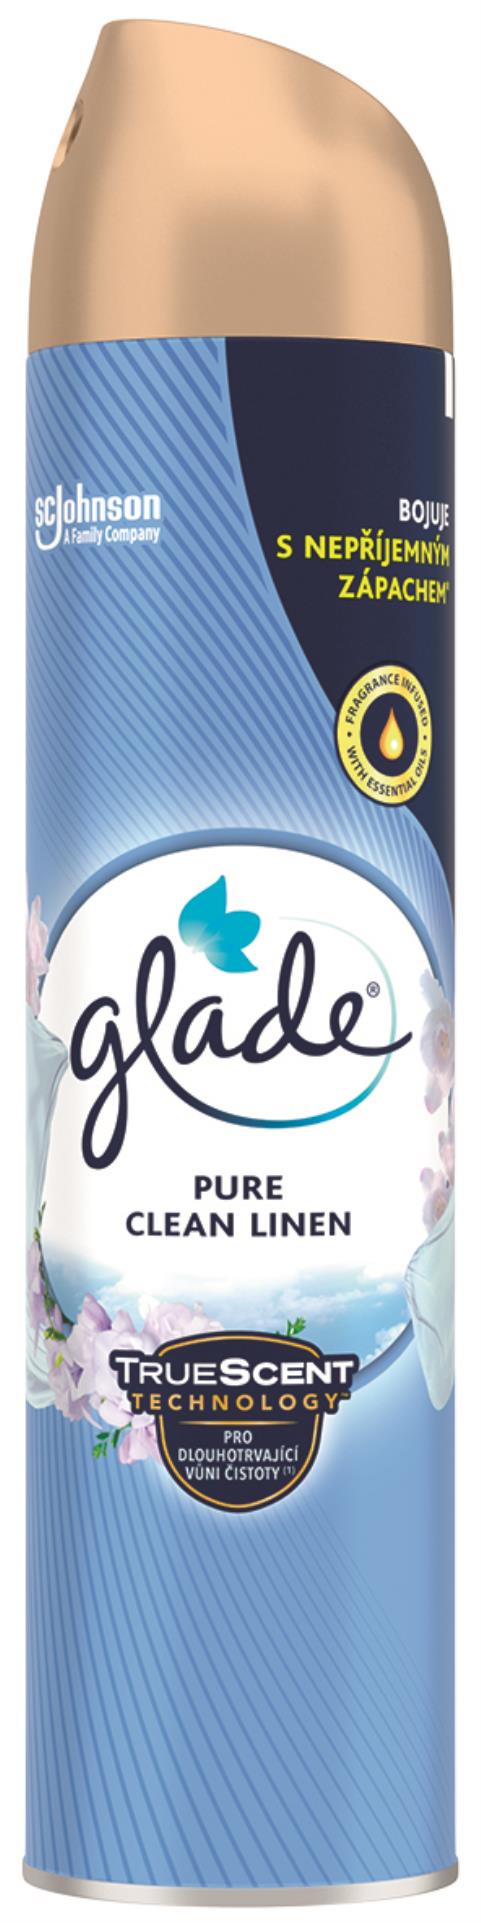 Osvěžovač vzduchu Glade aerosol - Clean Linen, 300 ml